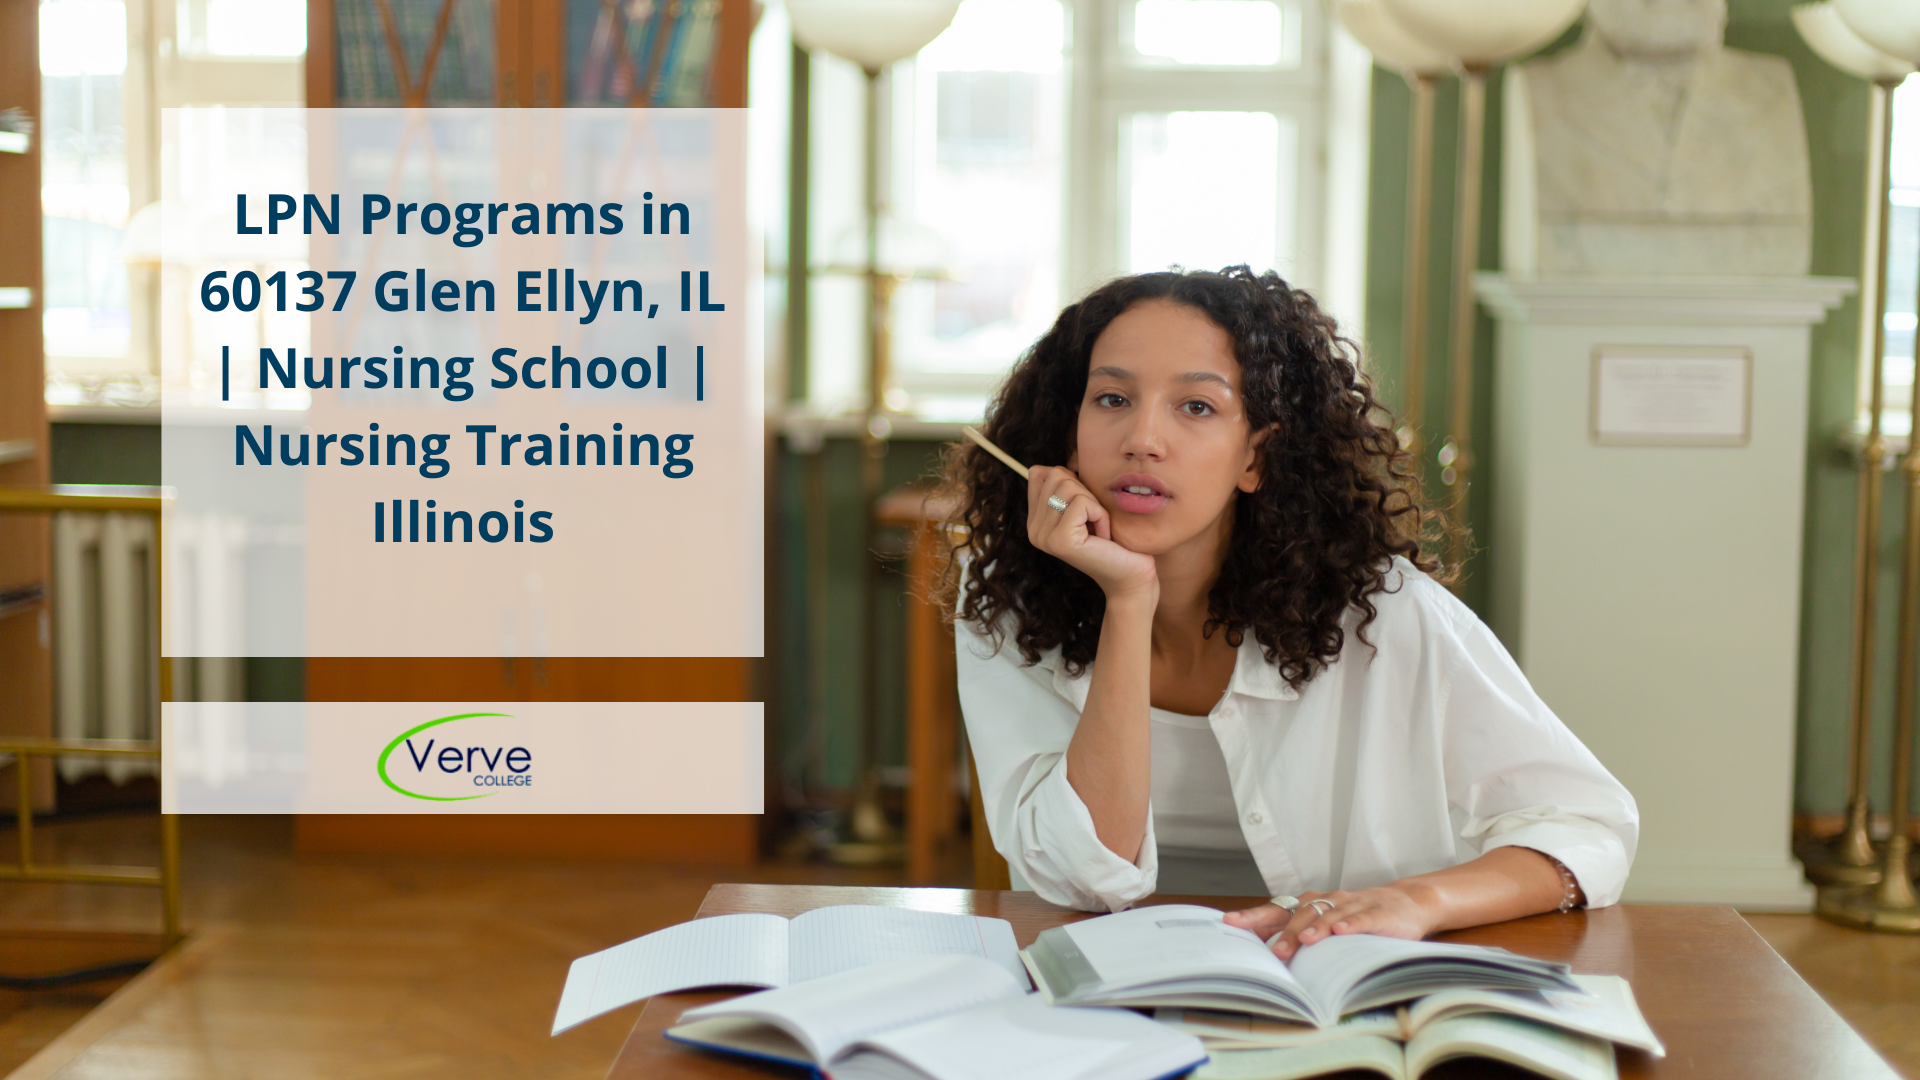 LPN Programs in 60137 Glen Ellyn, IL | Nursing School | Nursing Training Illinois